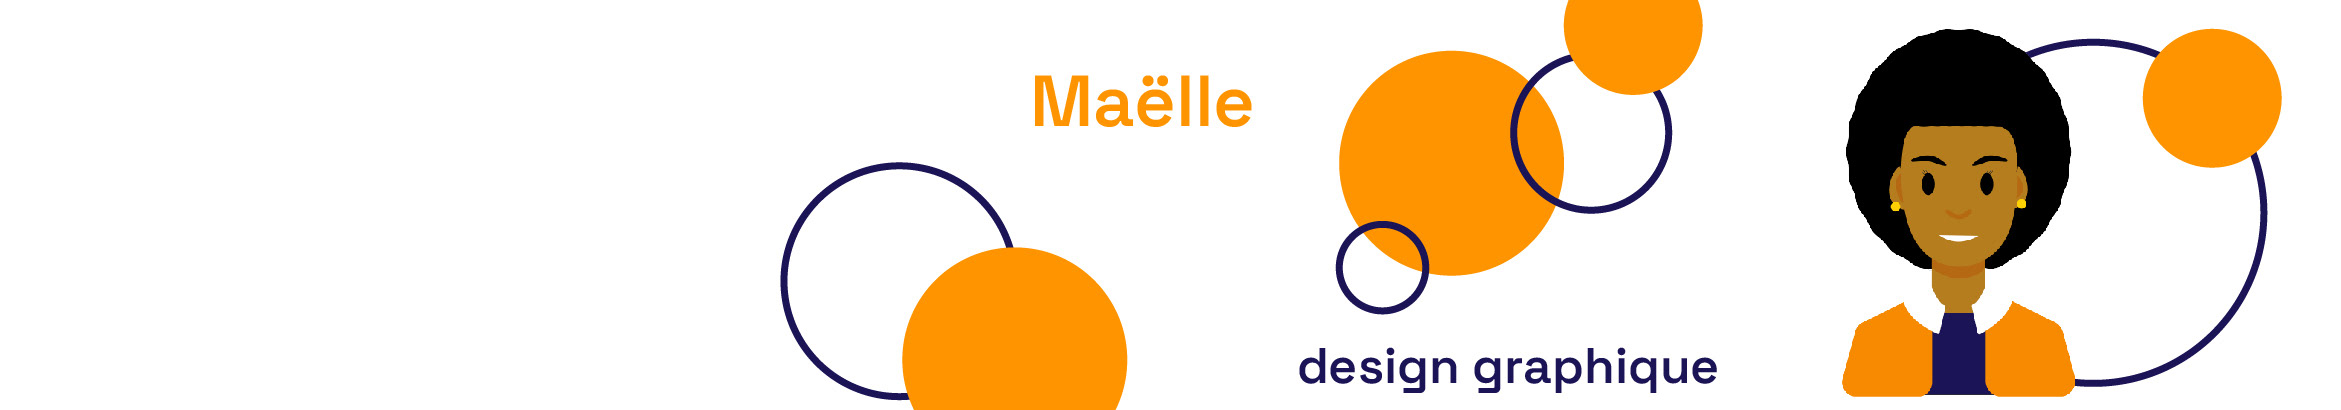 Maelle ROULIS's profile banner